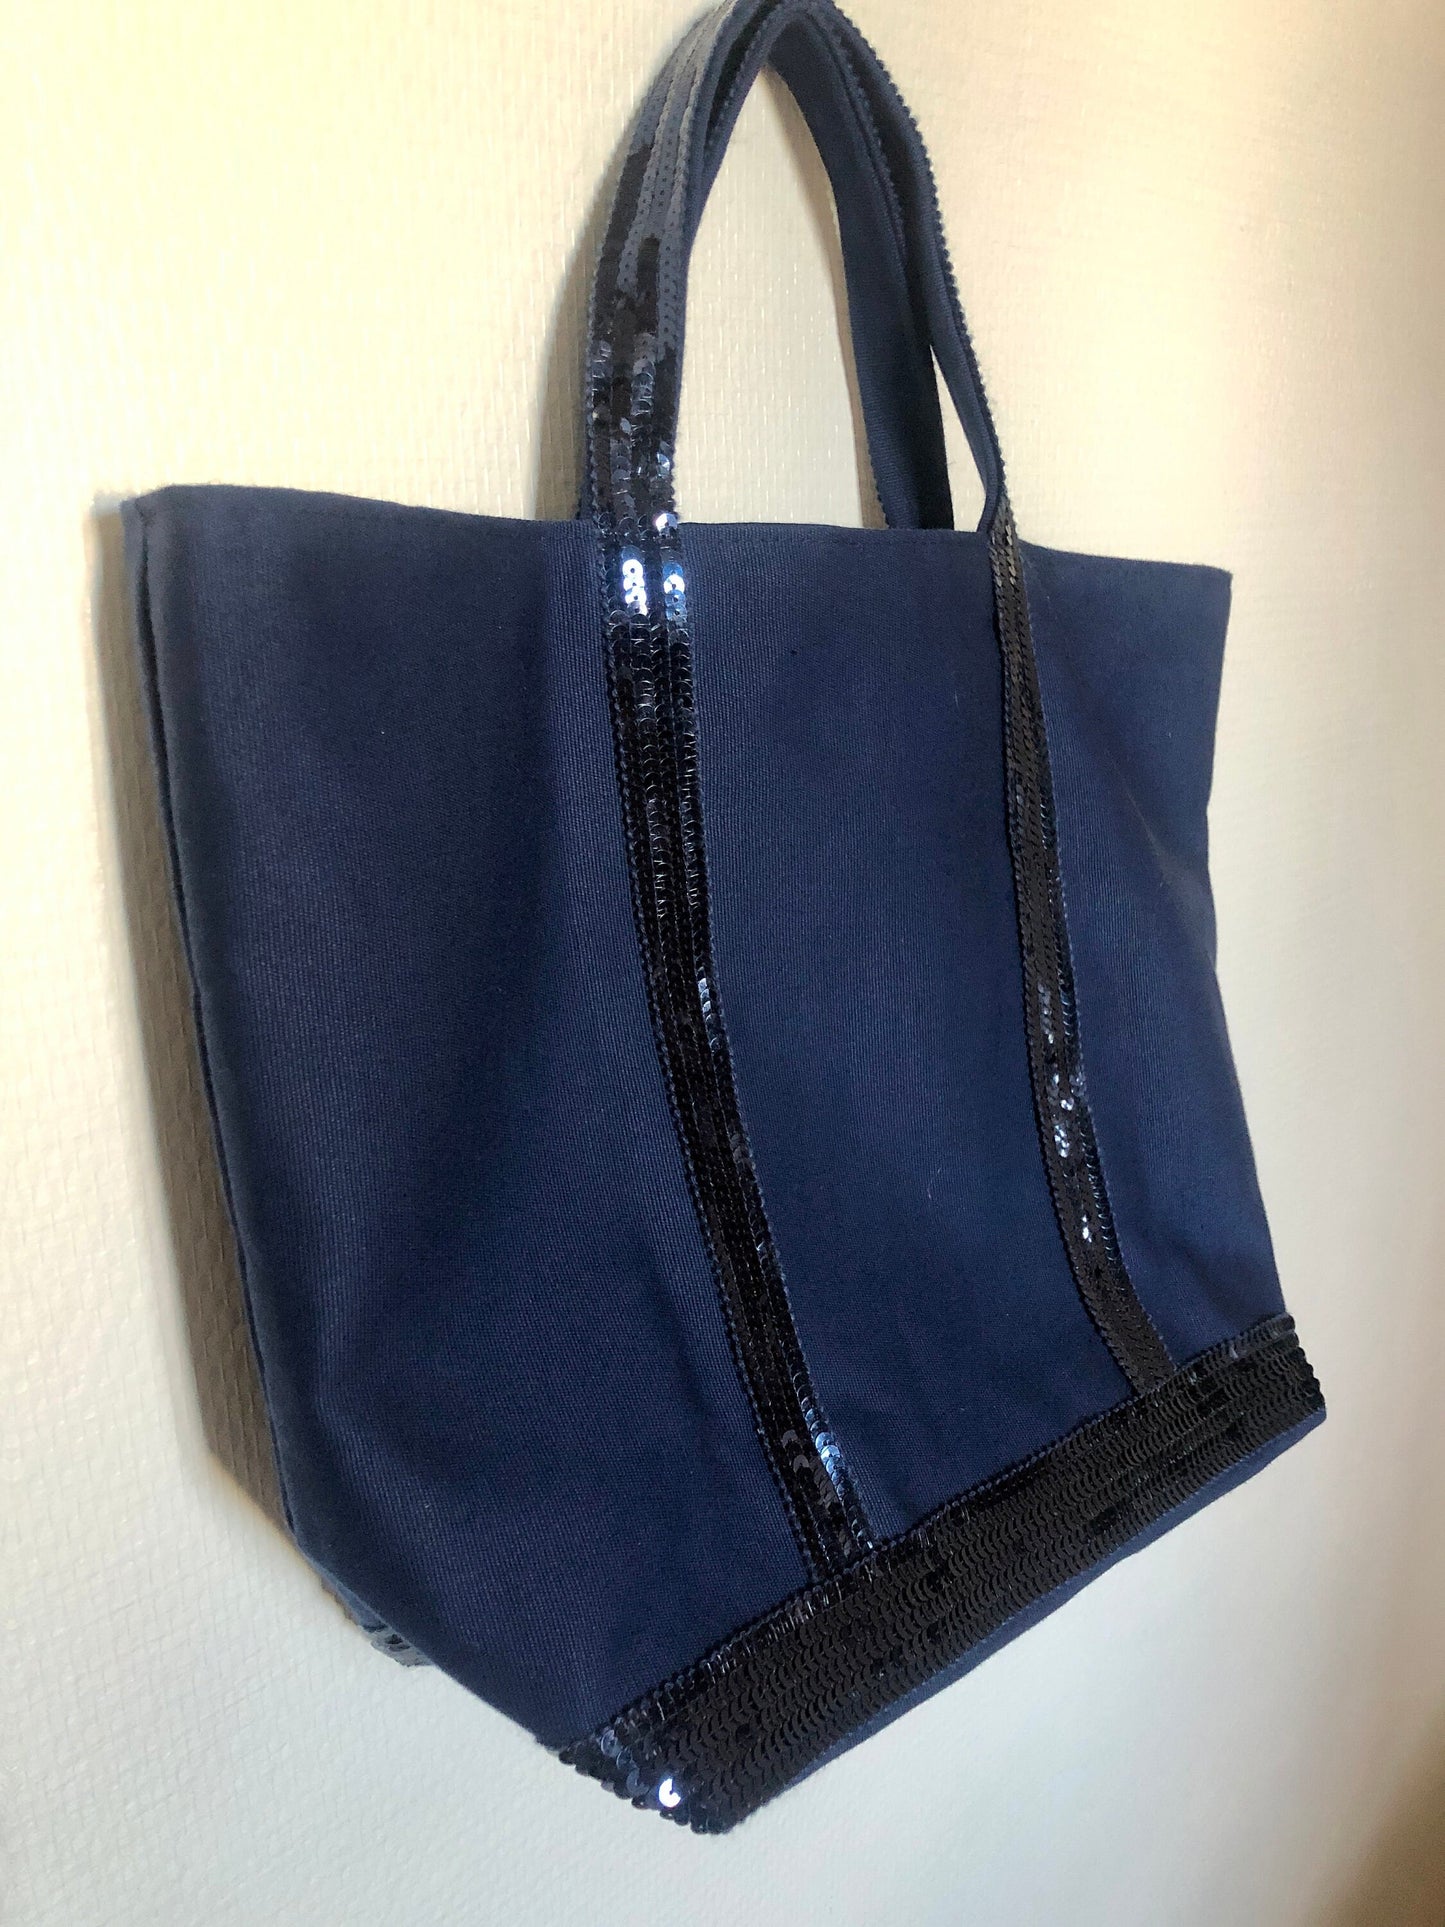 Navy cotton sequin tote bag, handheld navy shopper, French chic sequin purse, Emilie in Paris style, Paris chic purse,